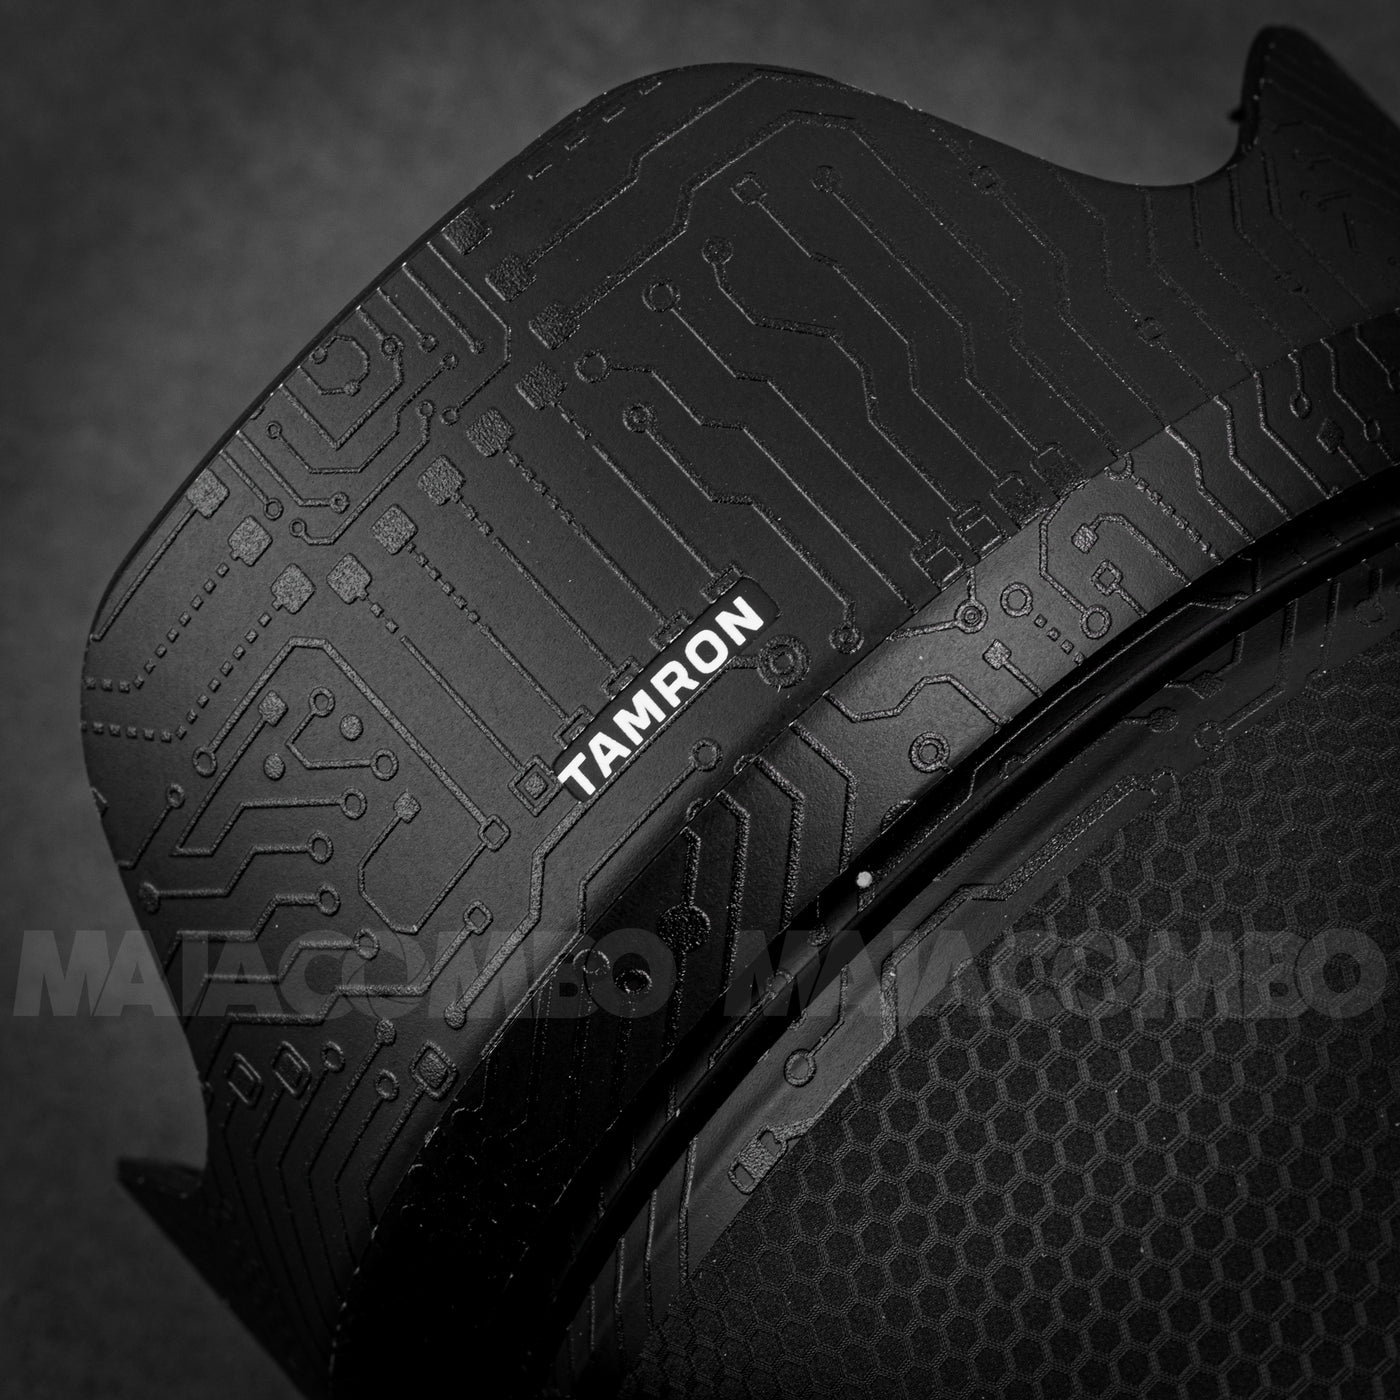 Tamron 18-300mm f/3.5-6.3 Di III-A VC VXD Lens Skin/ Wrap